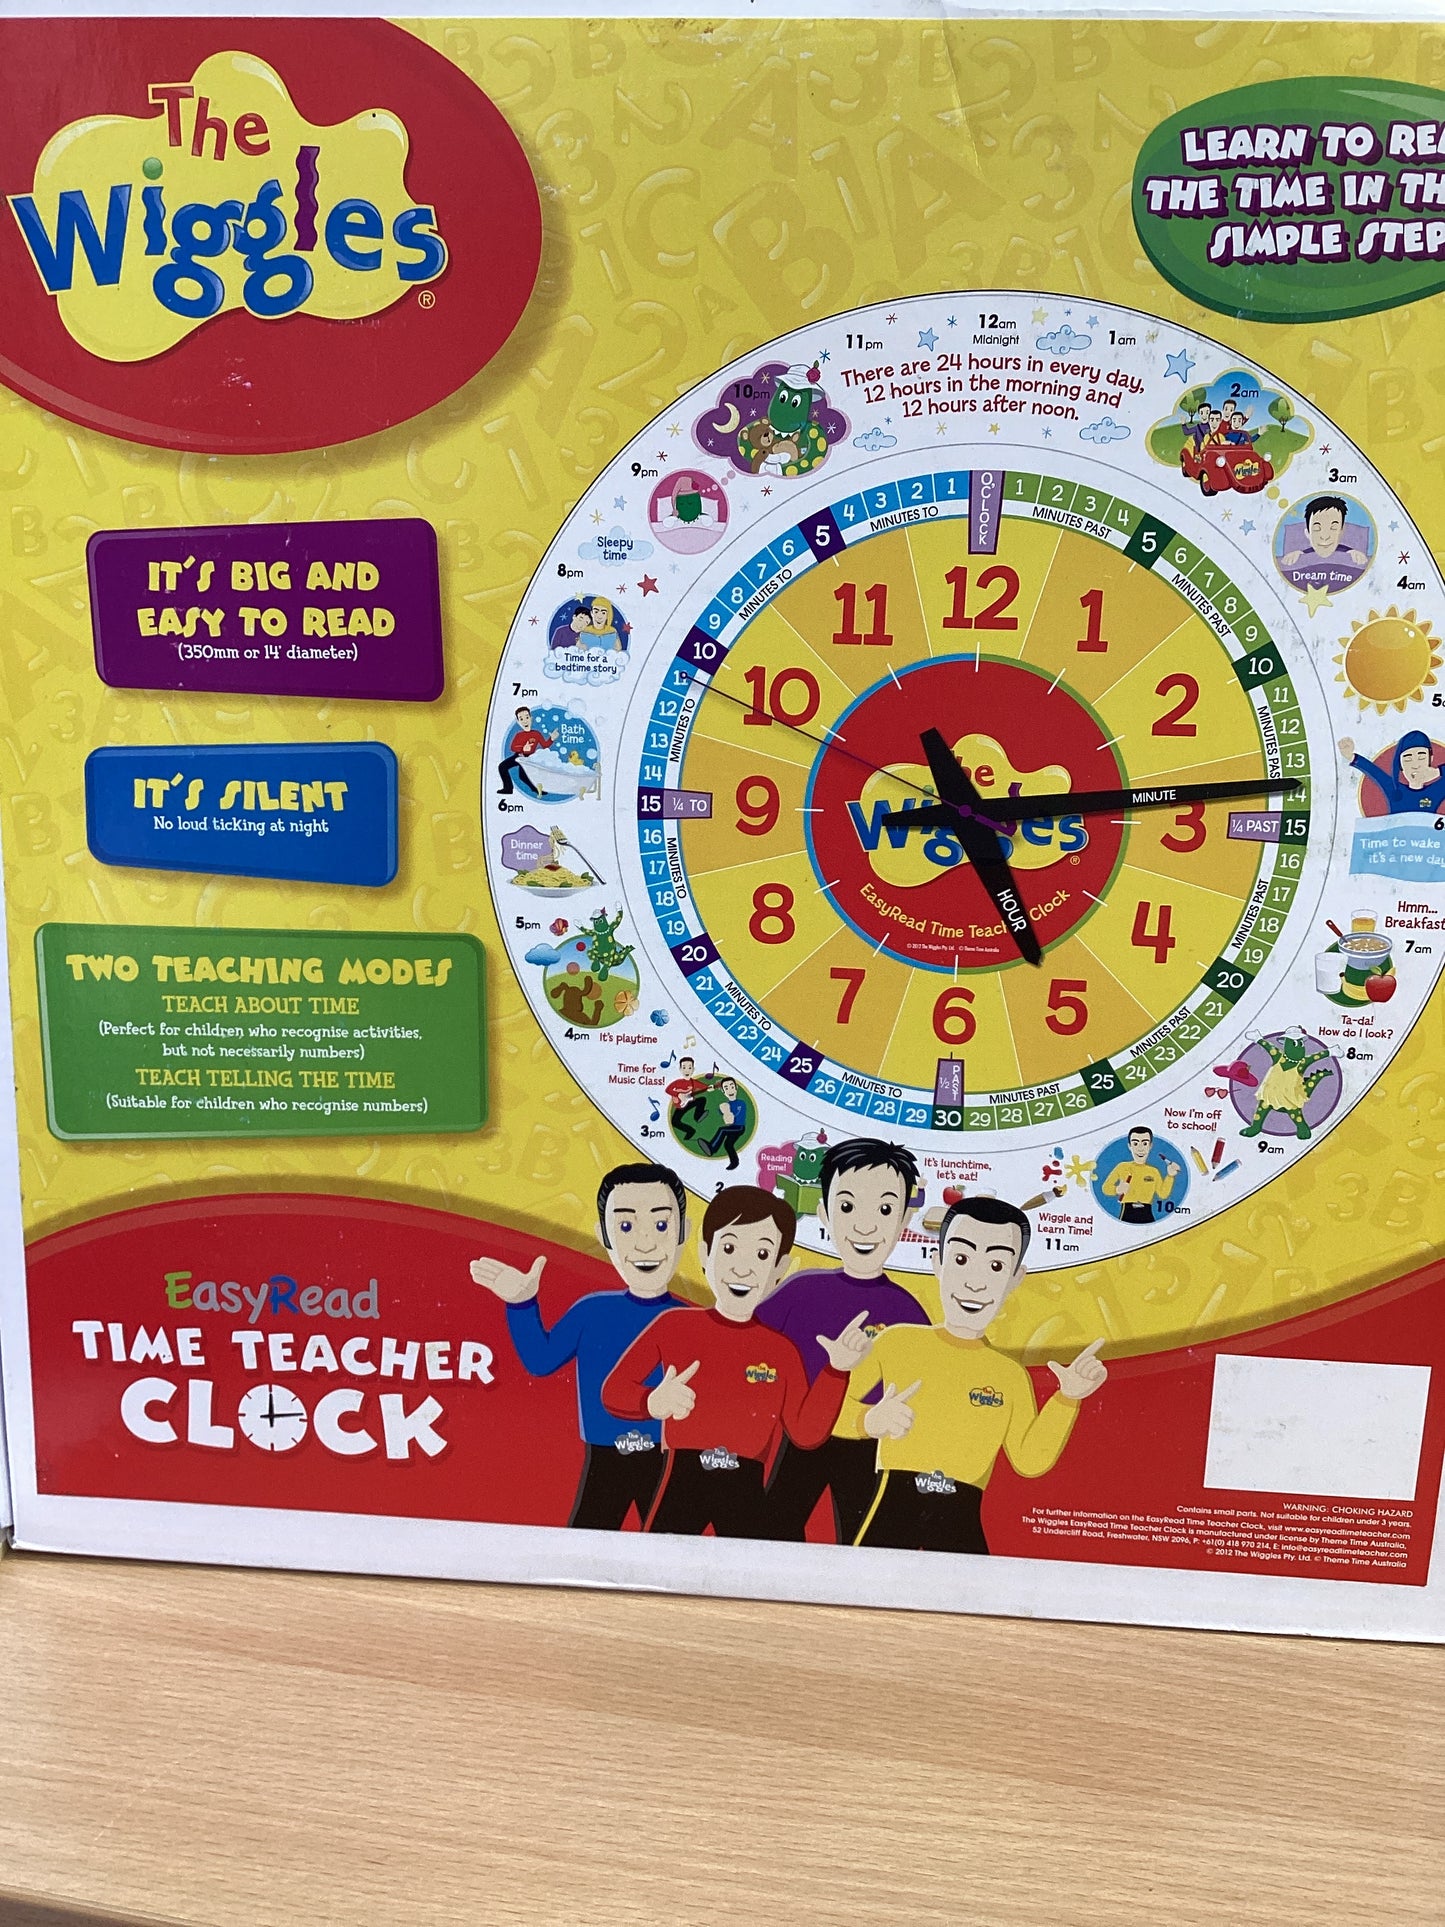 The Wiggles - EasyRead Time Teacher clock